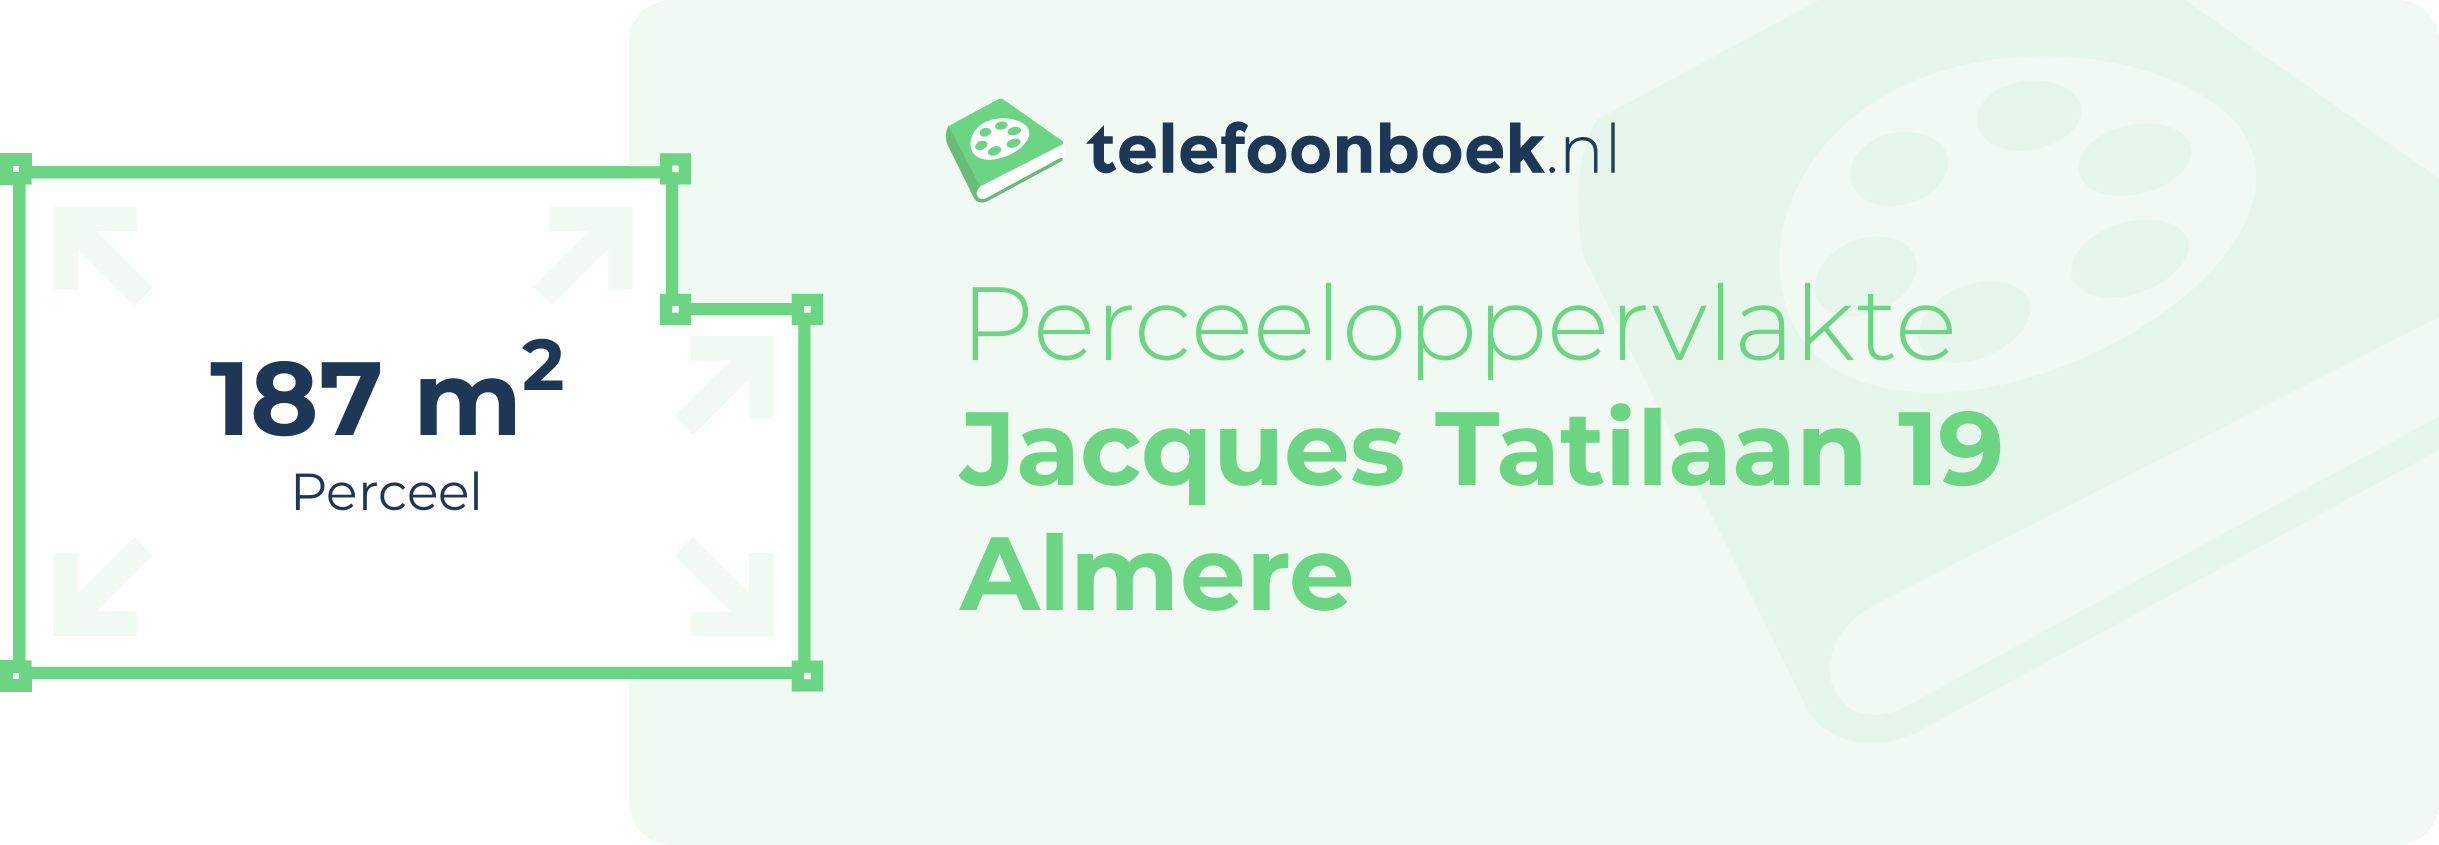 Perceeloppervlakte Jacques Tatilaan 19 Almere